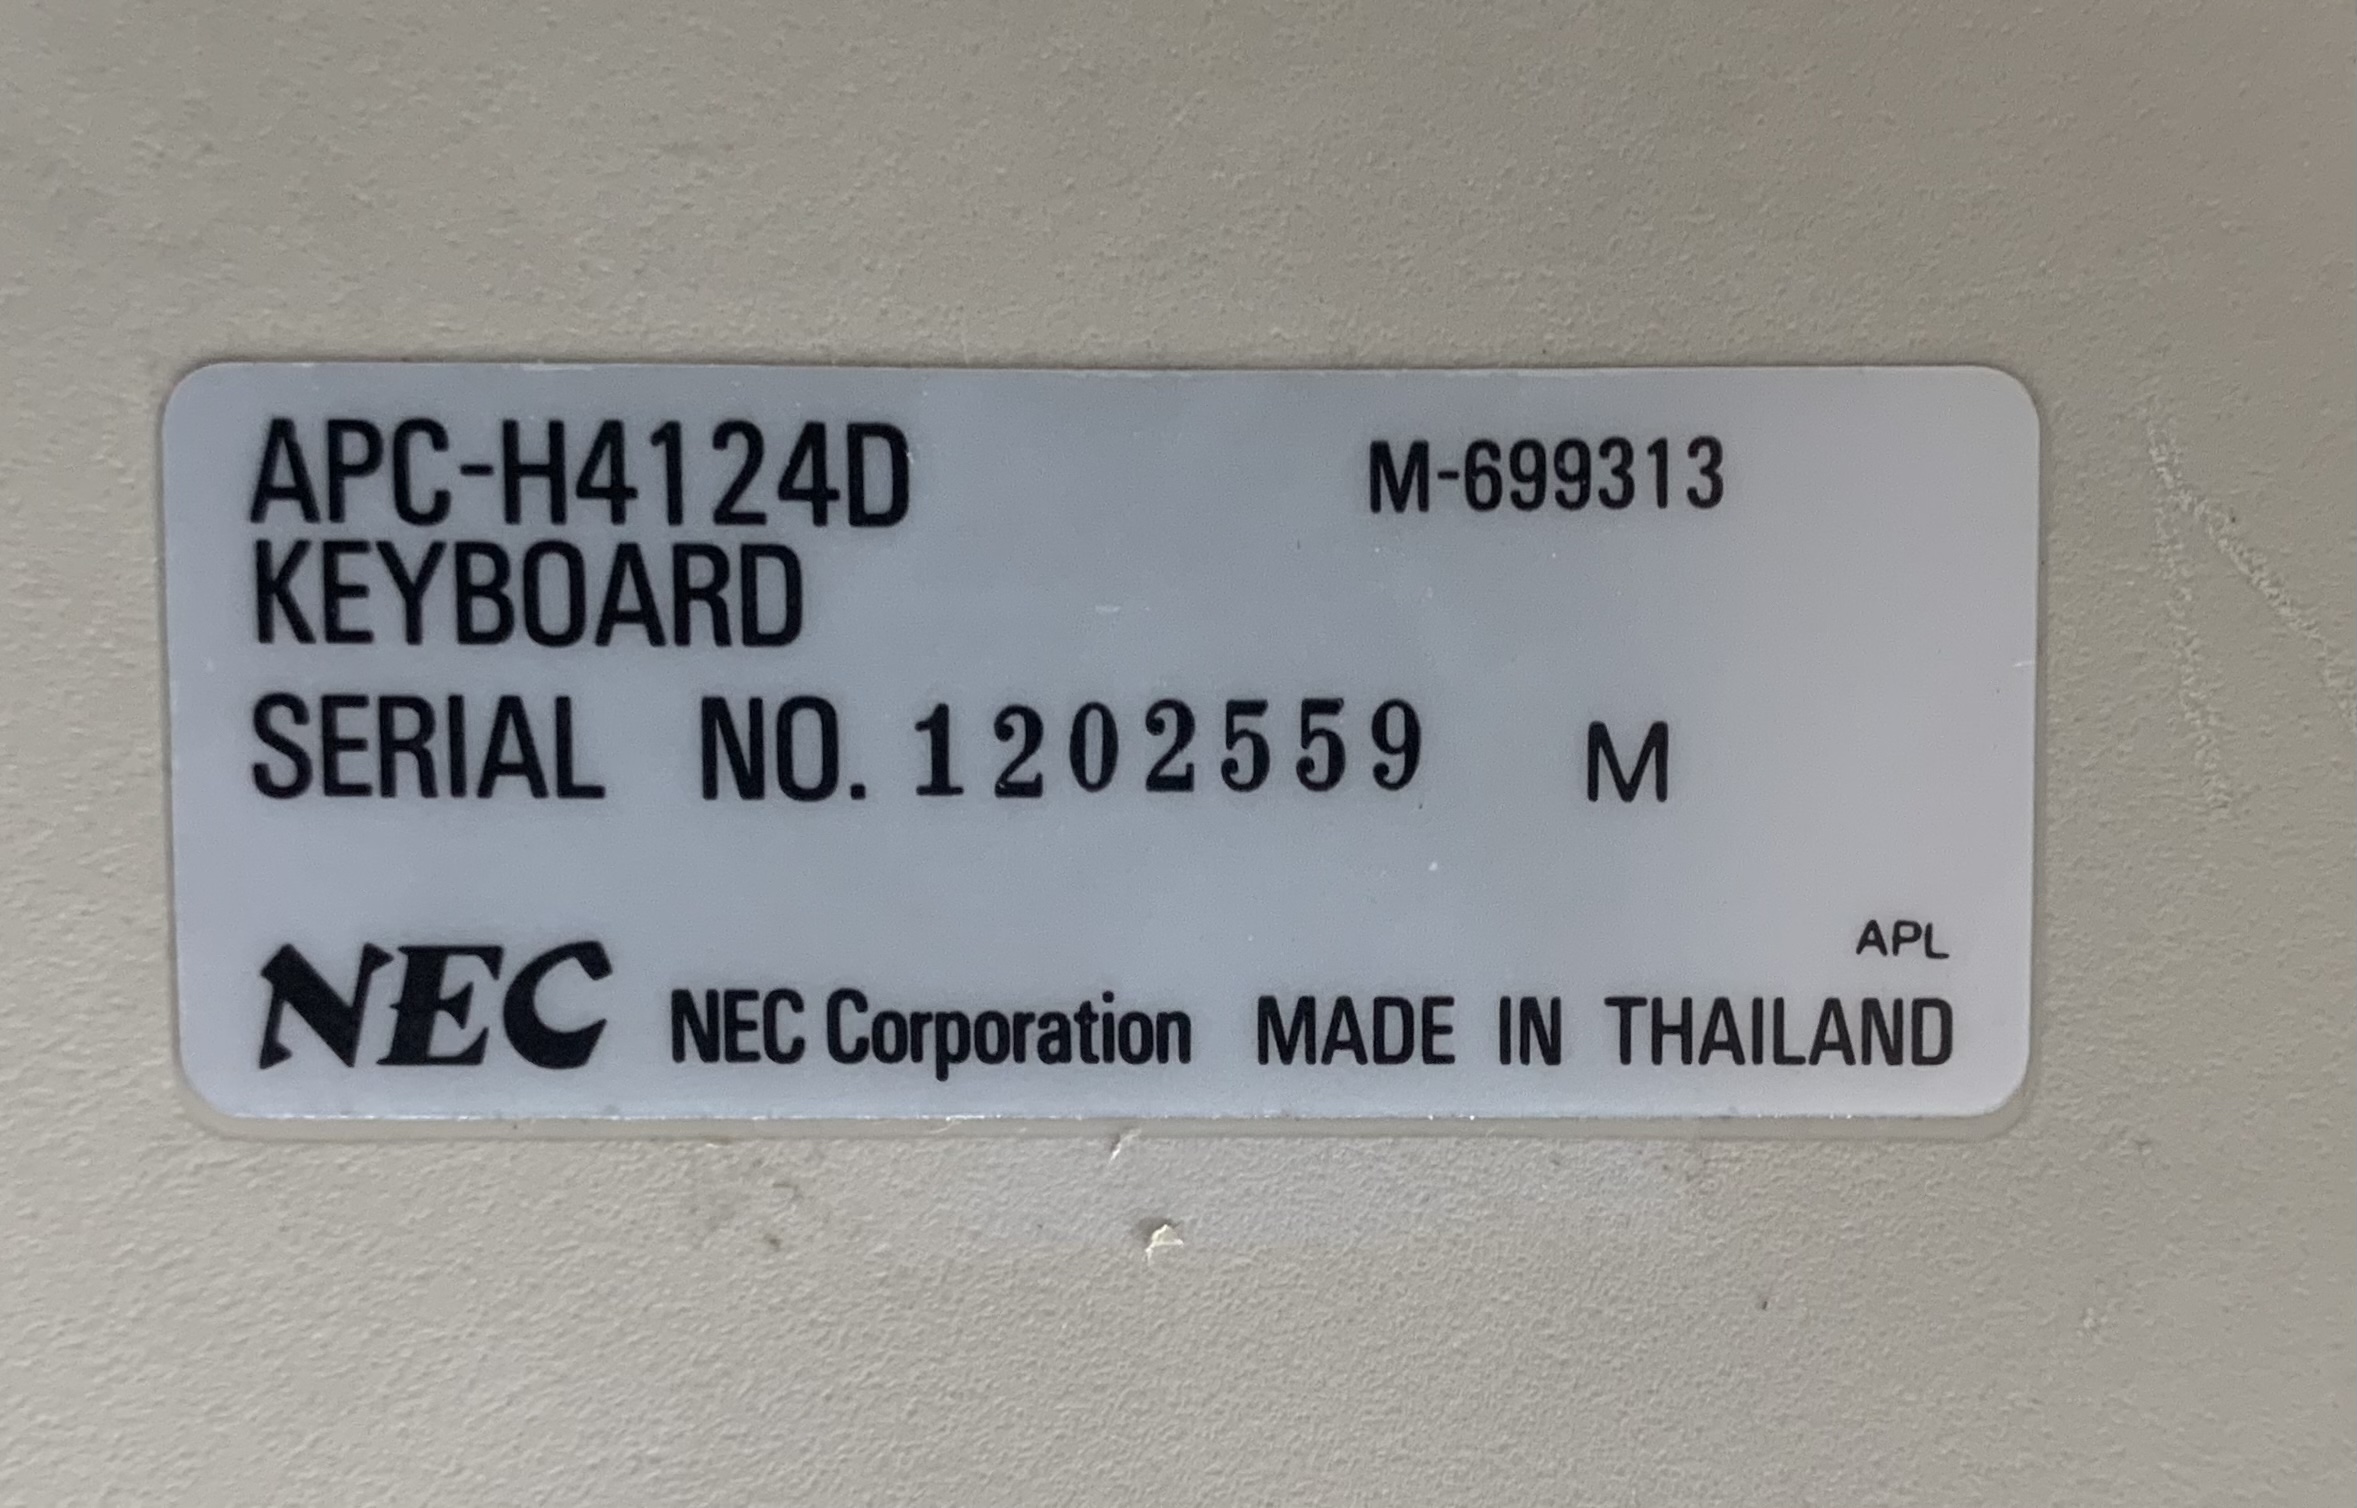 Sticker / label of a NEC APC-H4124D keyboard